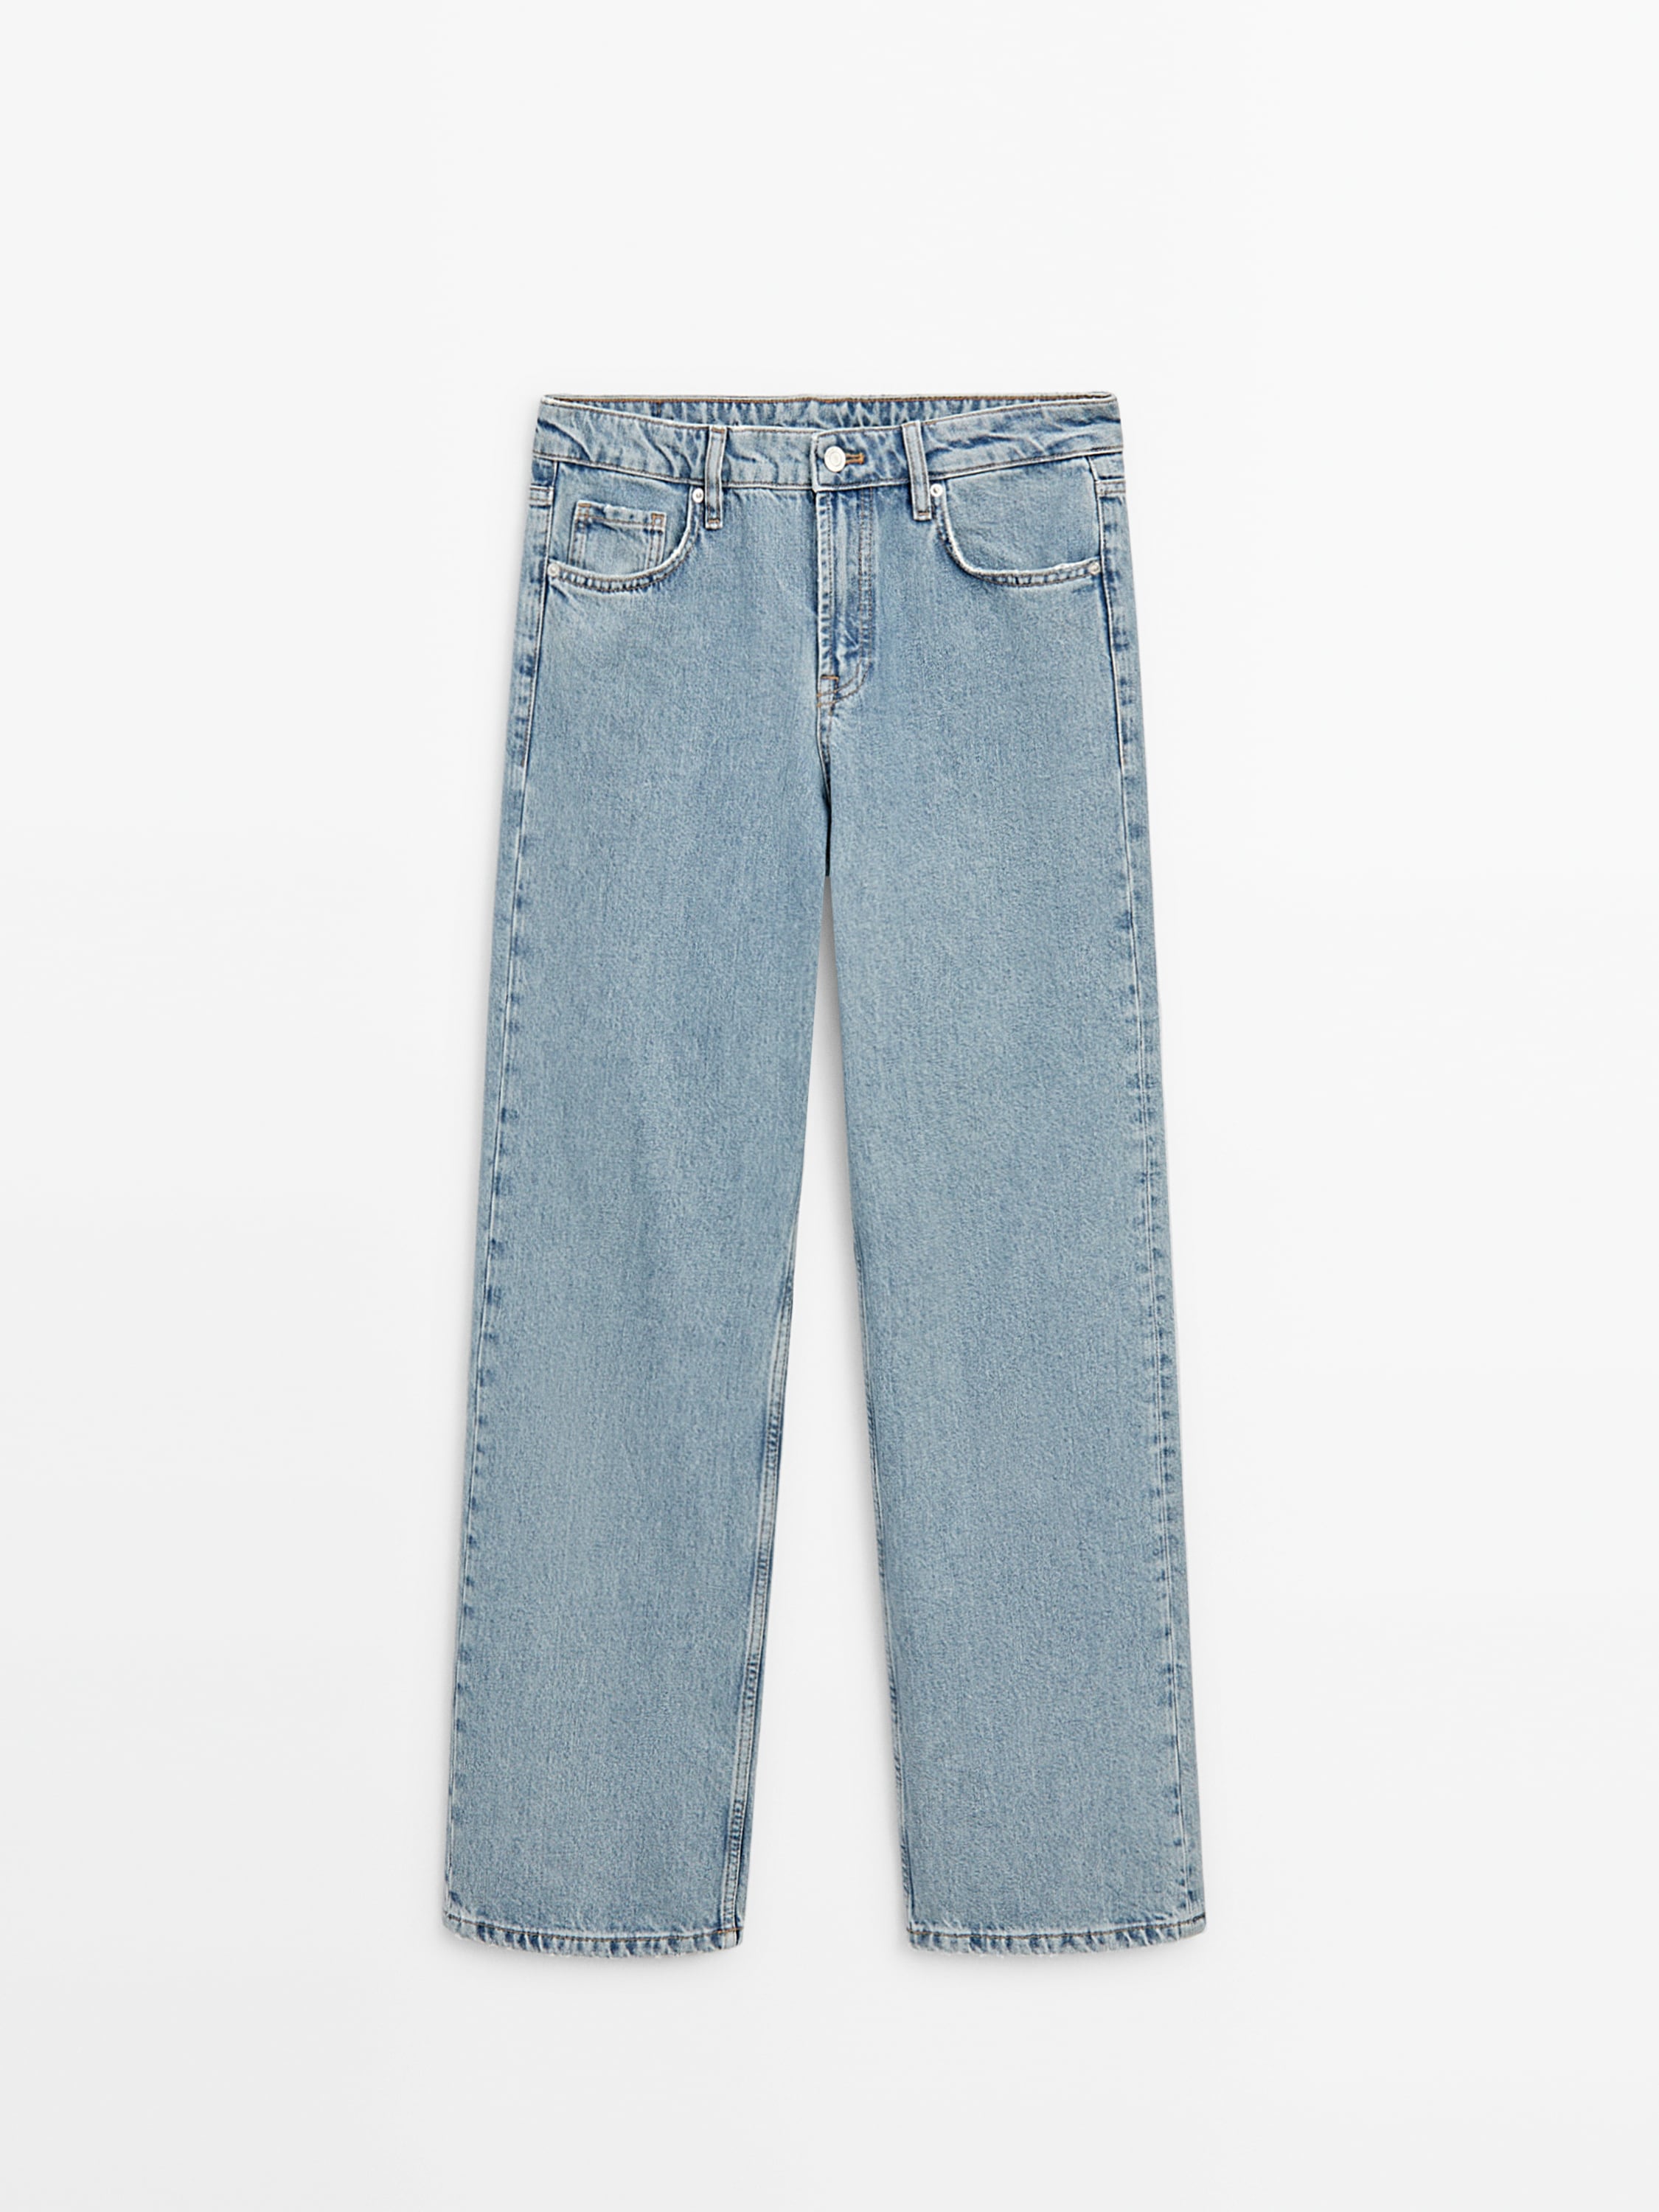 Low-rise straight-leg regular length jeans